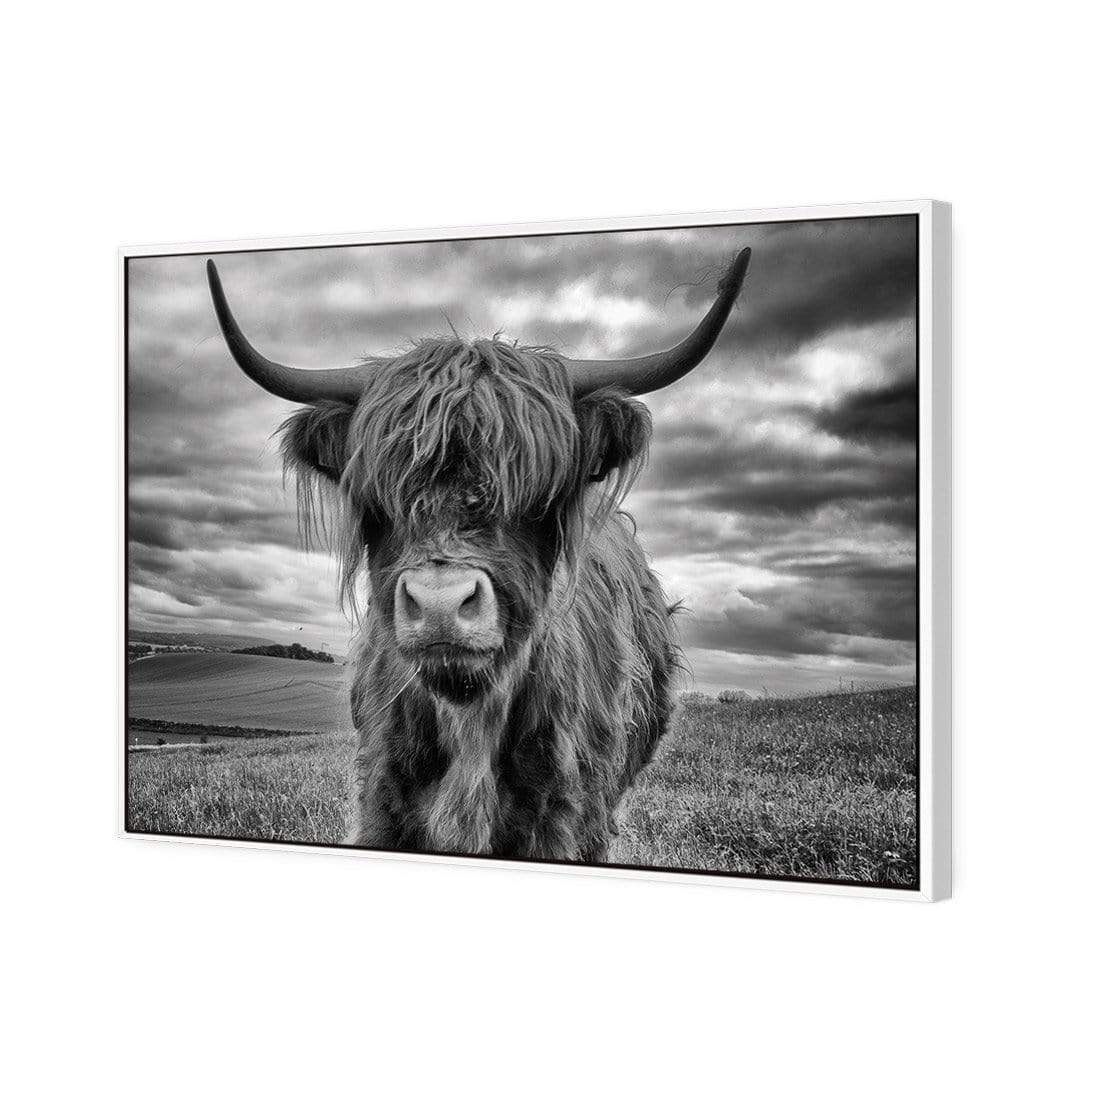 Stormy the Highland Cow - wallart-australia - Canvas